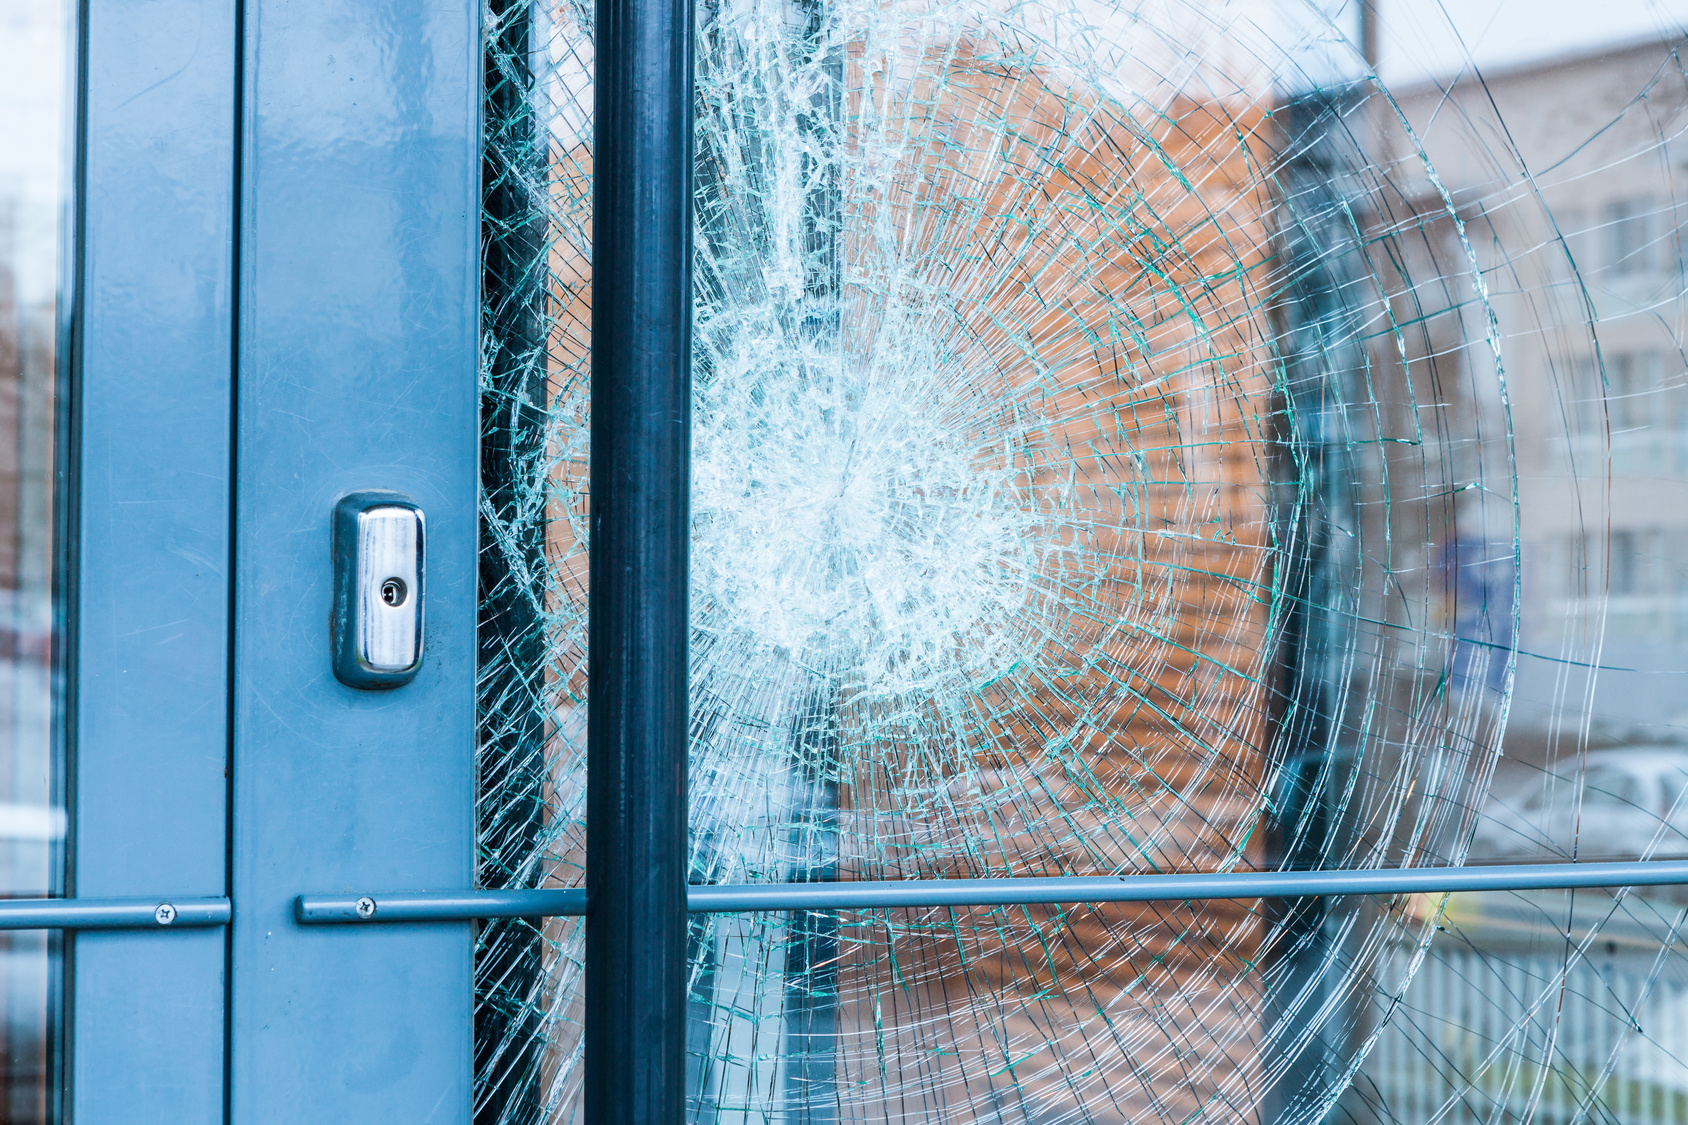 Broken glass need residential glass repair